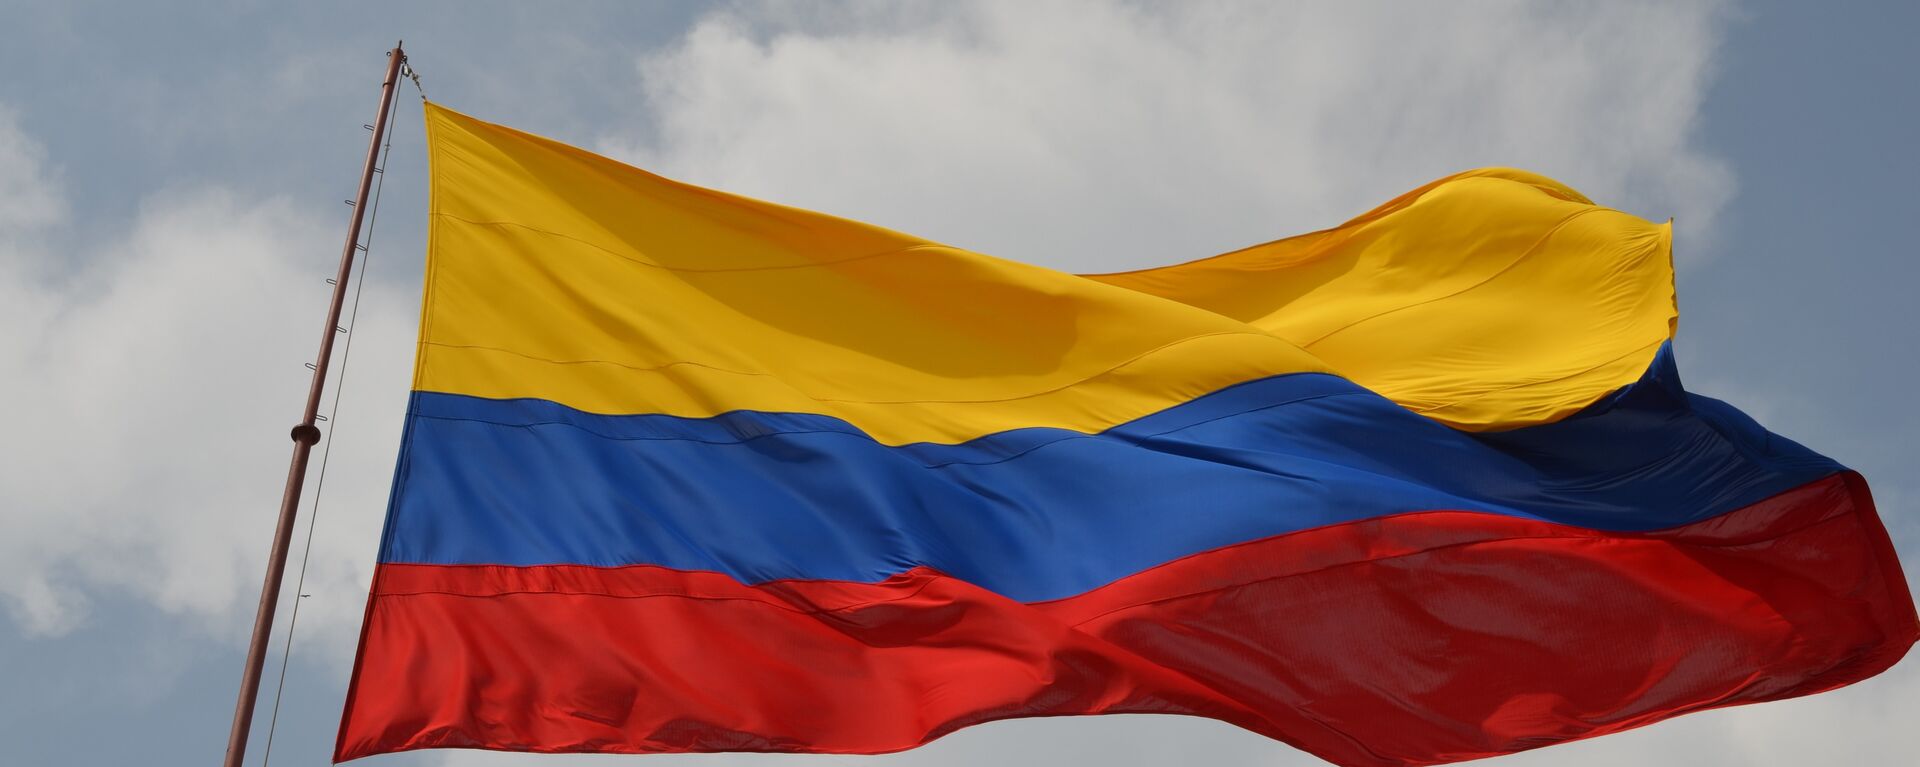 Bandera de Colombia - Sputnik Mundo, 1920, 10.09.2021